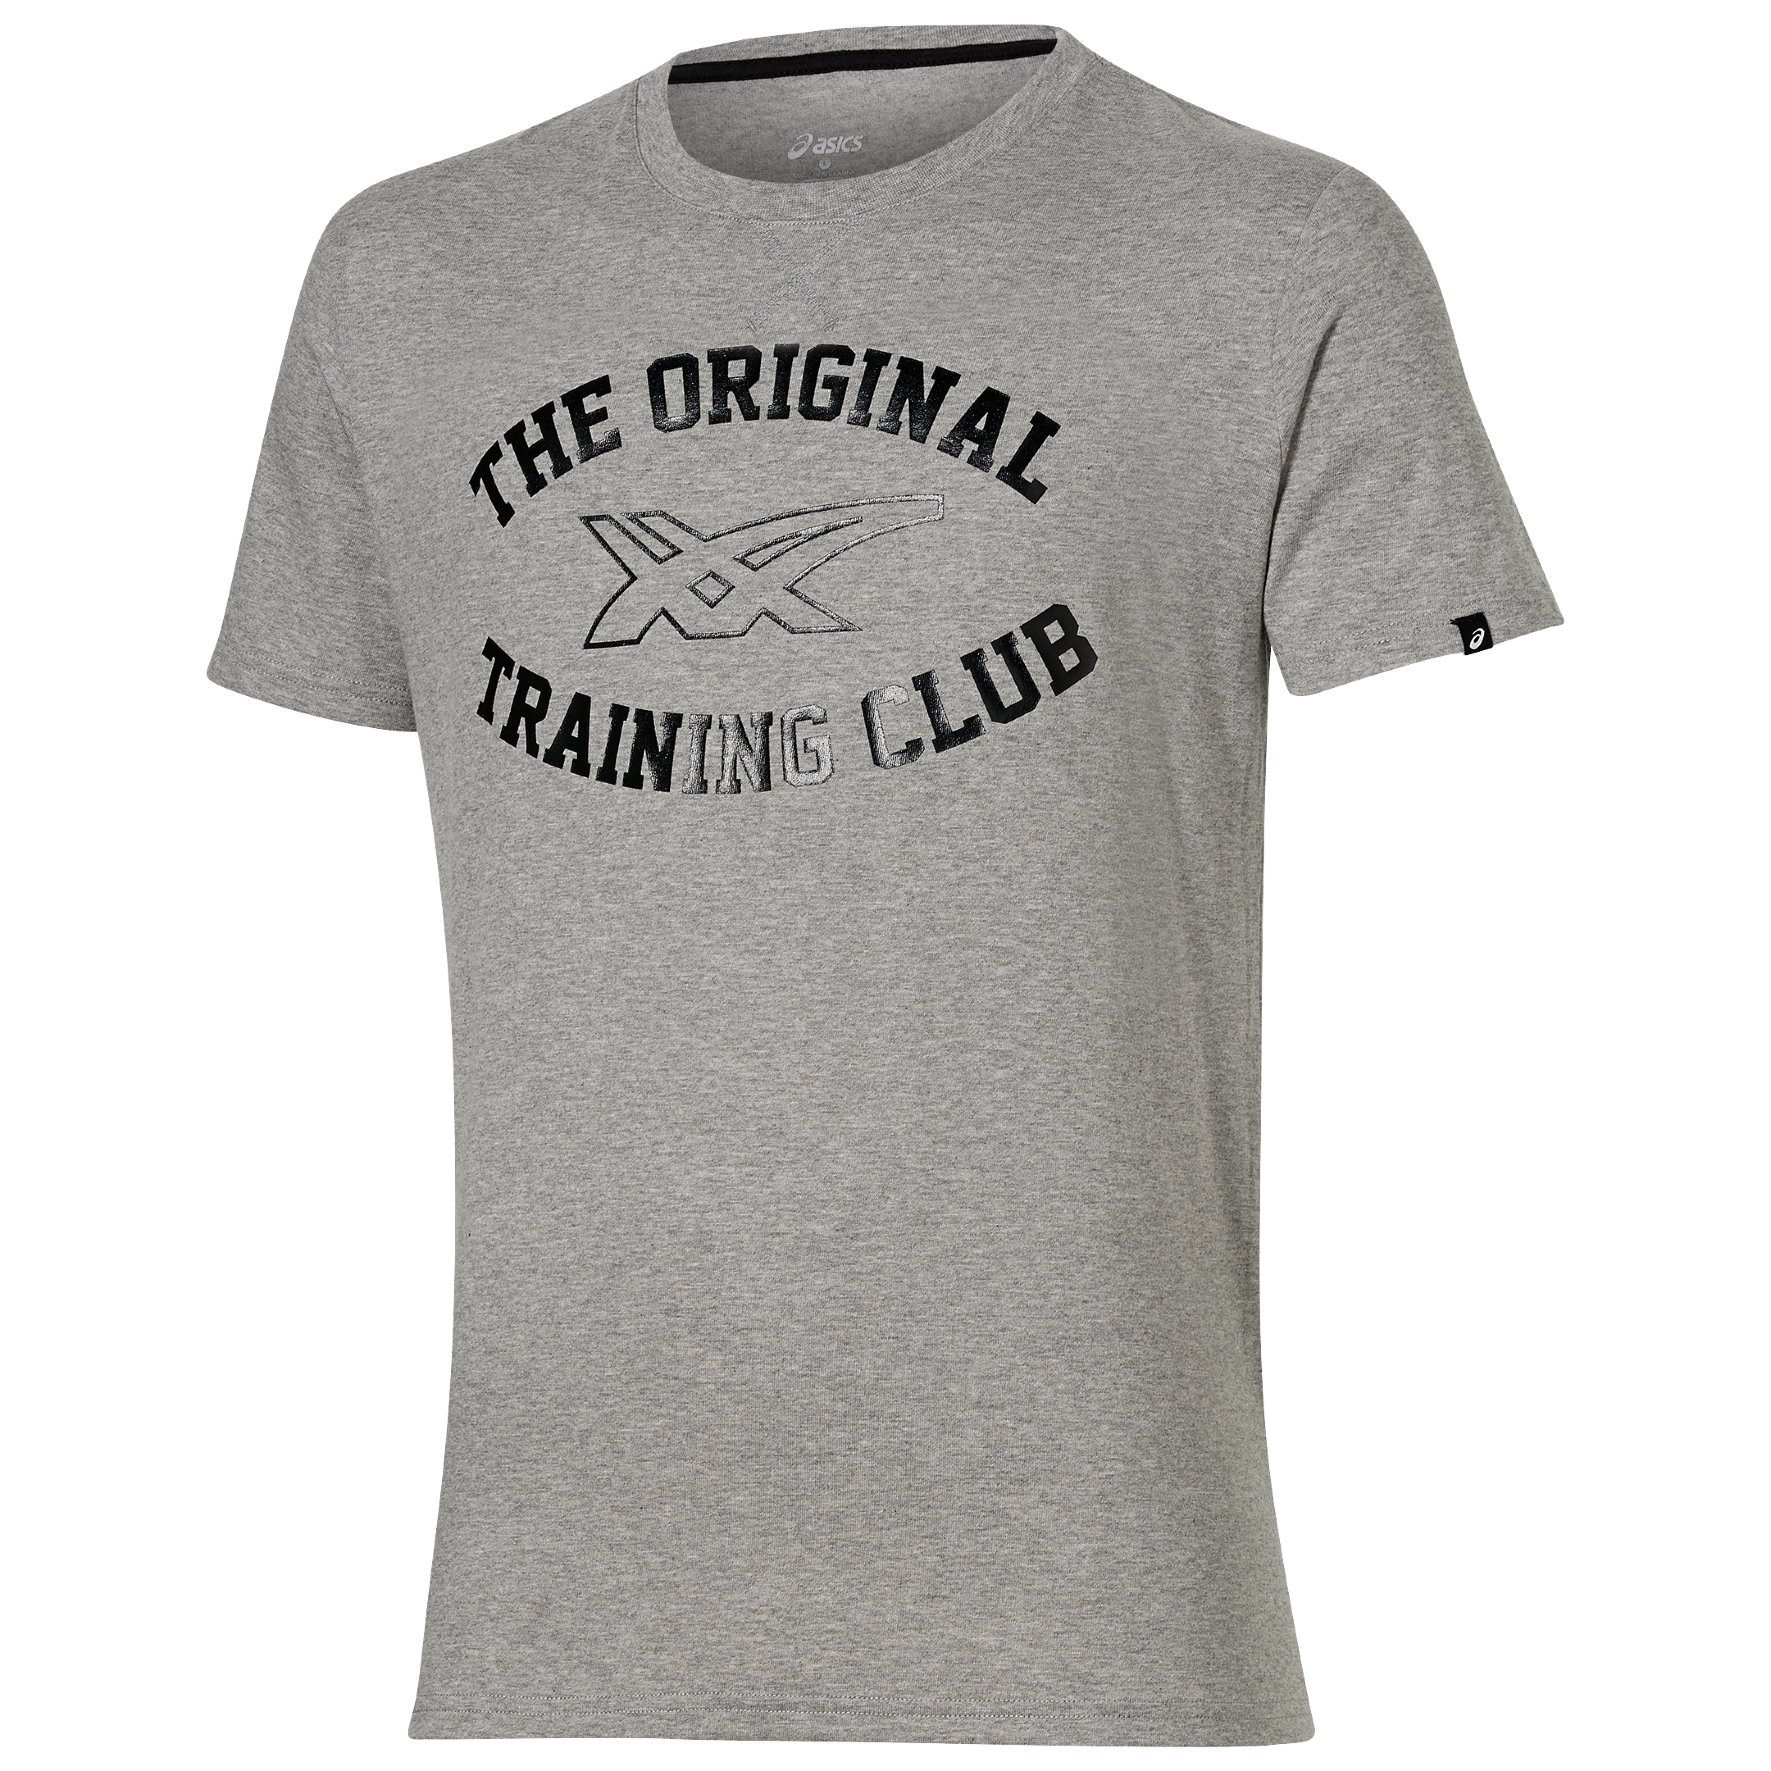 Футболка graphic. ASICS Match graphic SS Top футболка. Асикс футболка мужская хлопок. Training Club футболка. Original ABS T-Shirt.